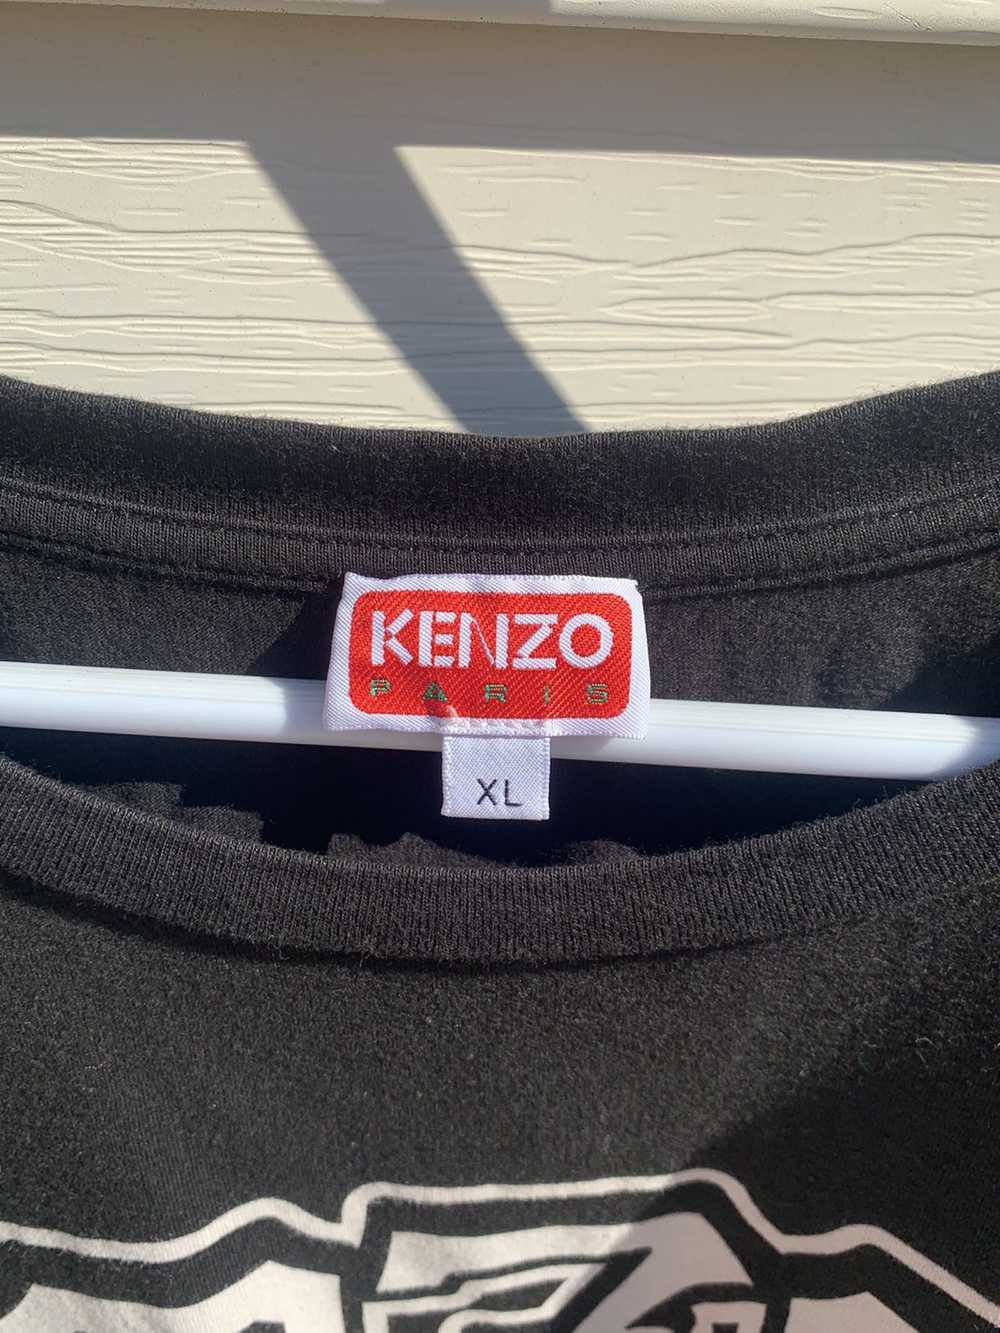 Kenzo Kenzo box fit graphic tee - image 3